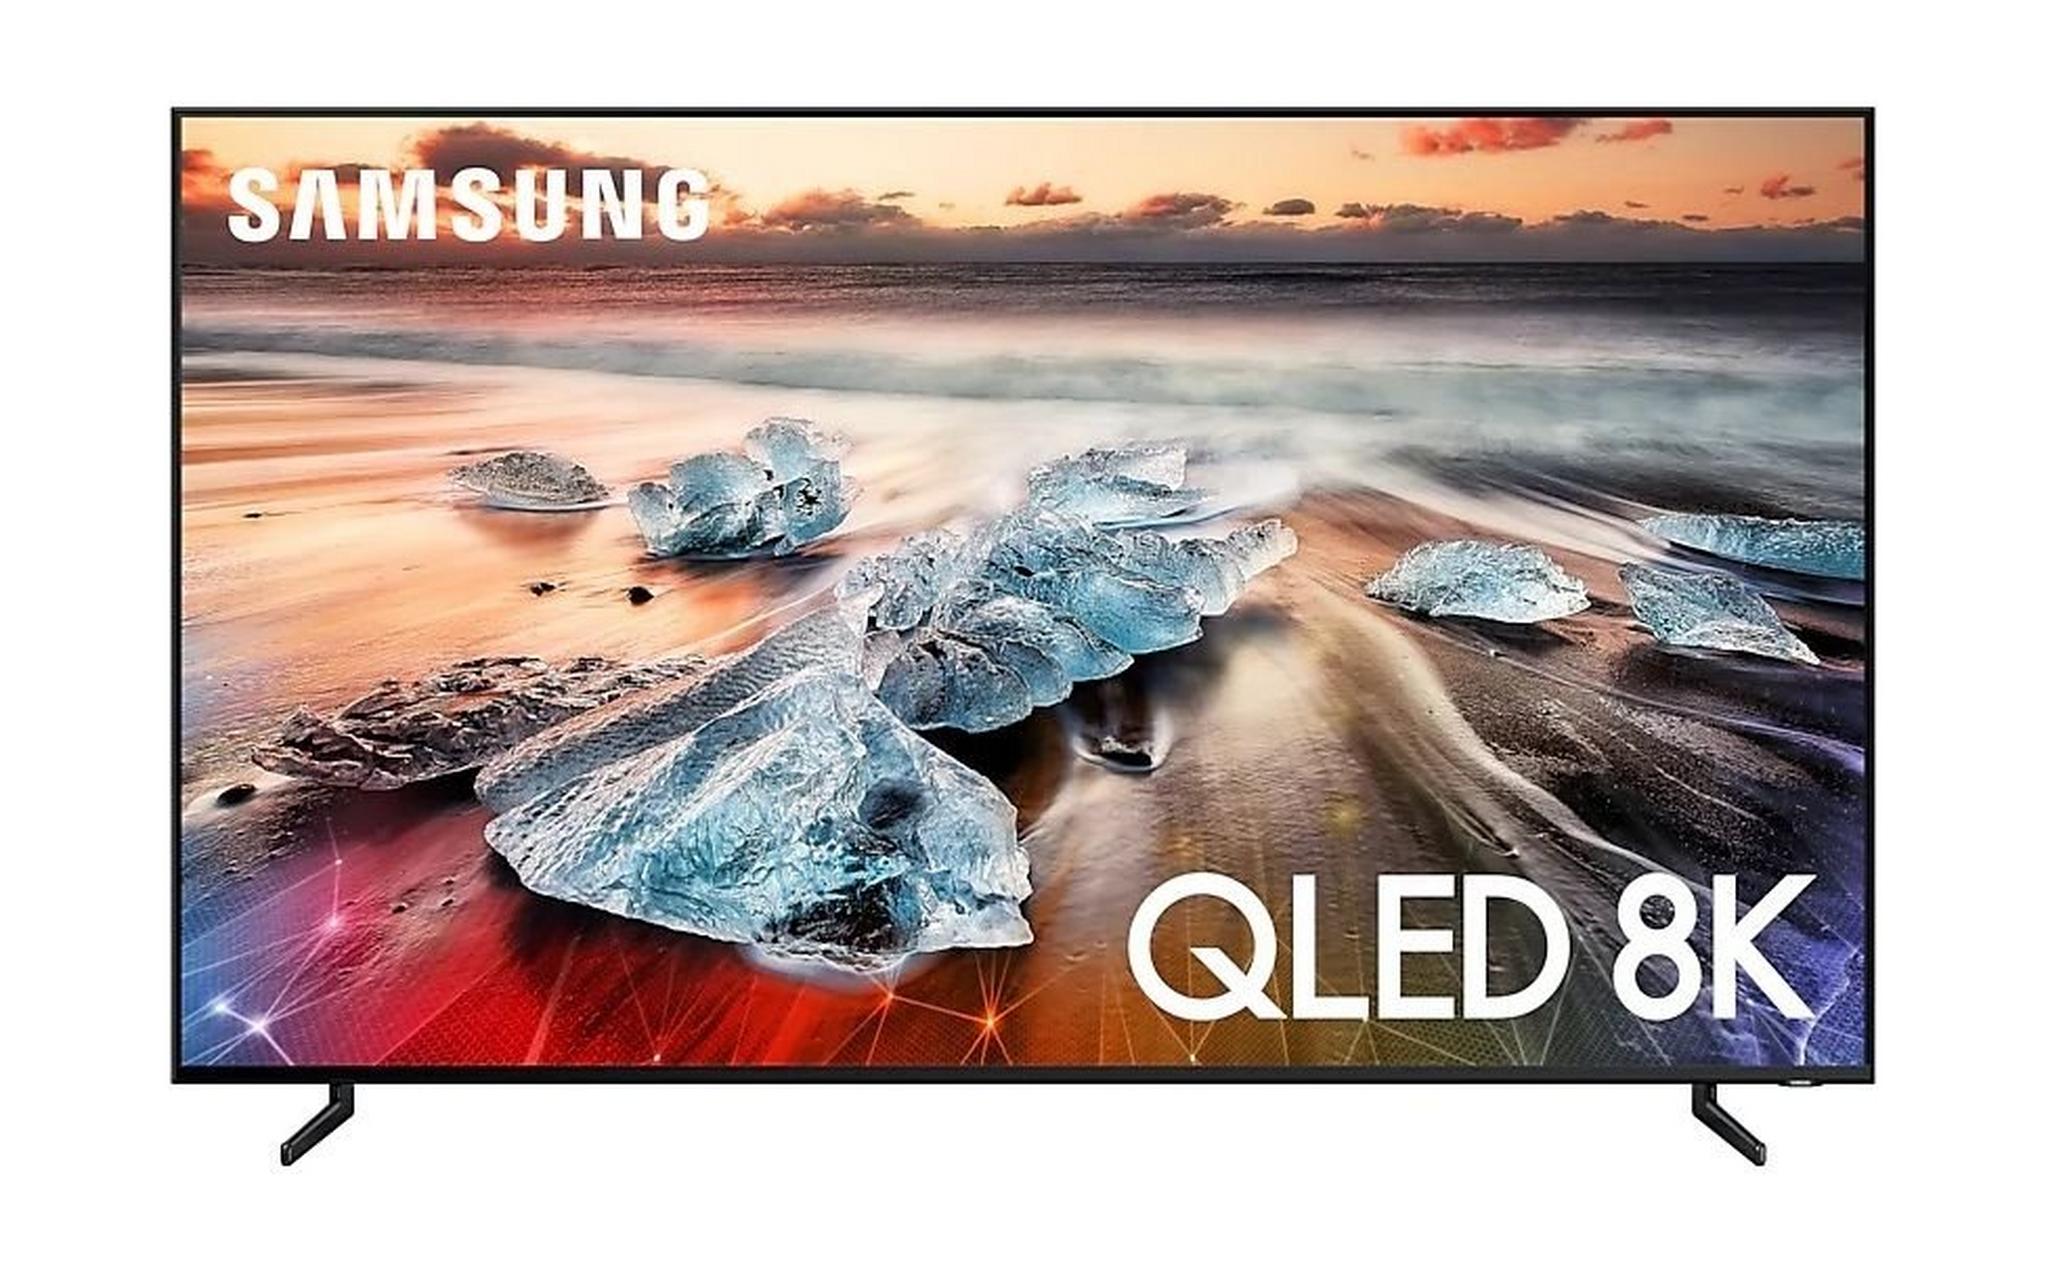 Samsung TV Q900R 82 inch 8K Smart QLED - QA82Q900R